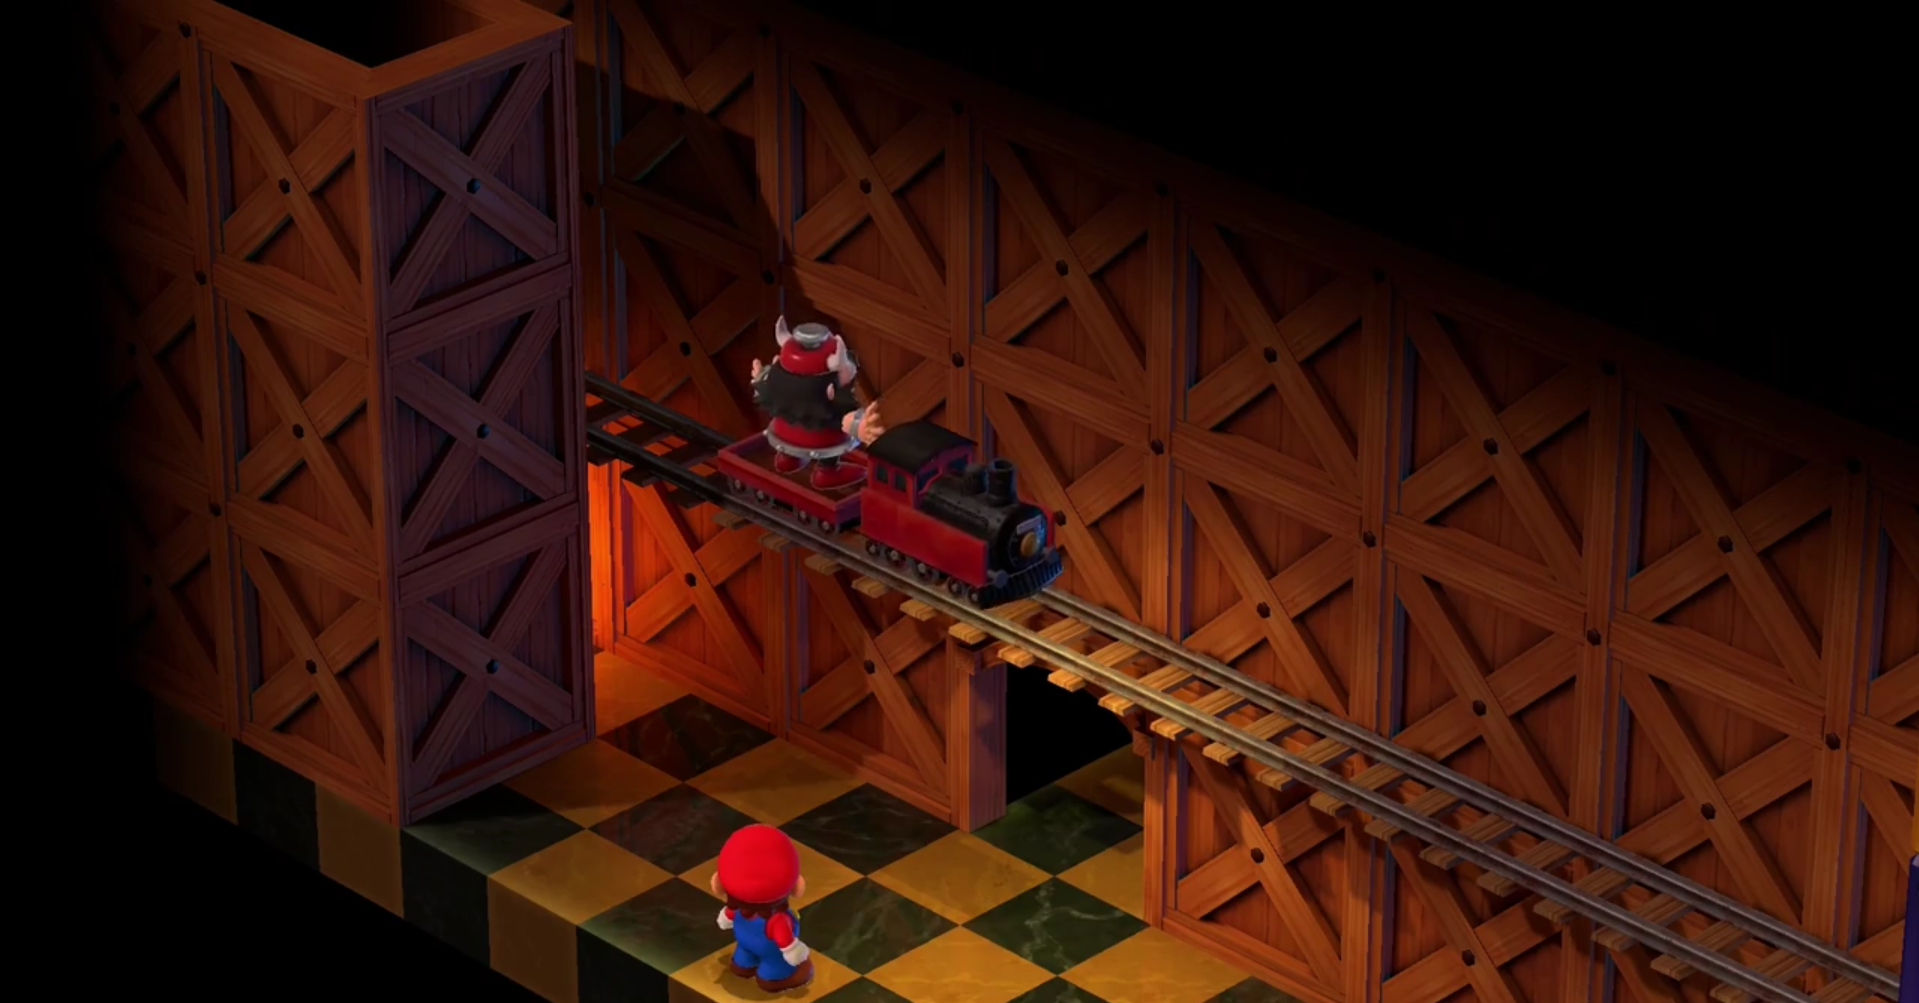 Booster riding a train in Super Mario RPG.